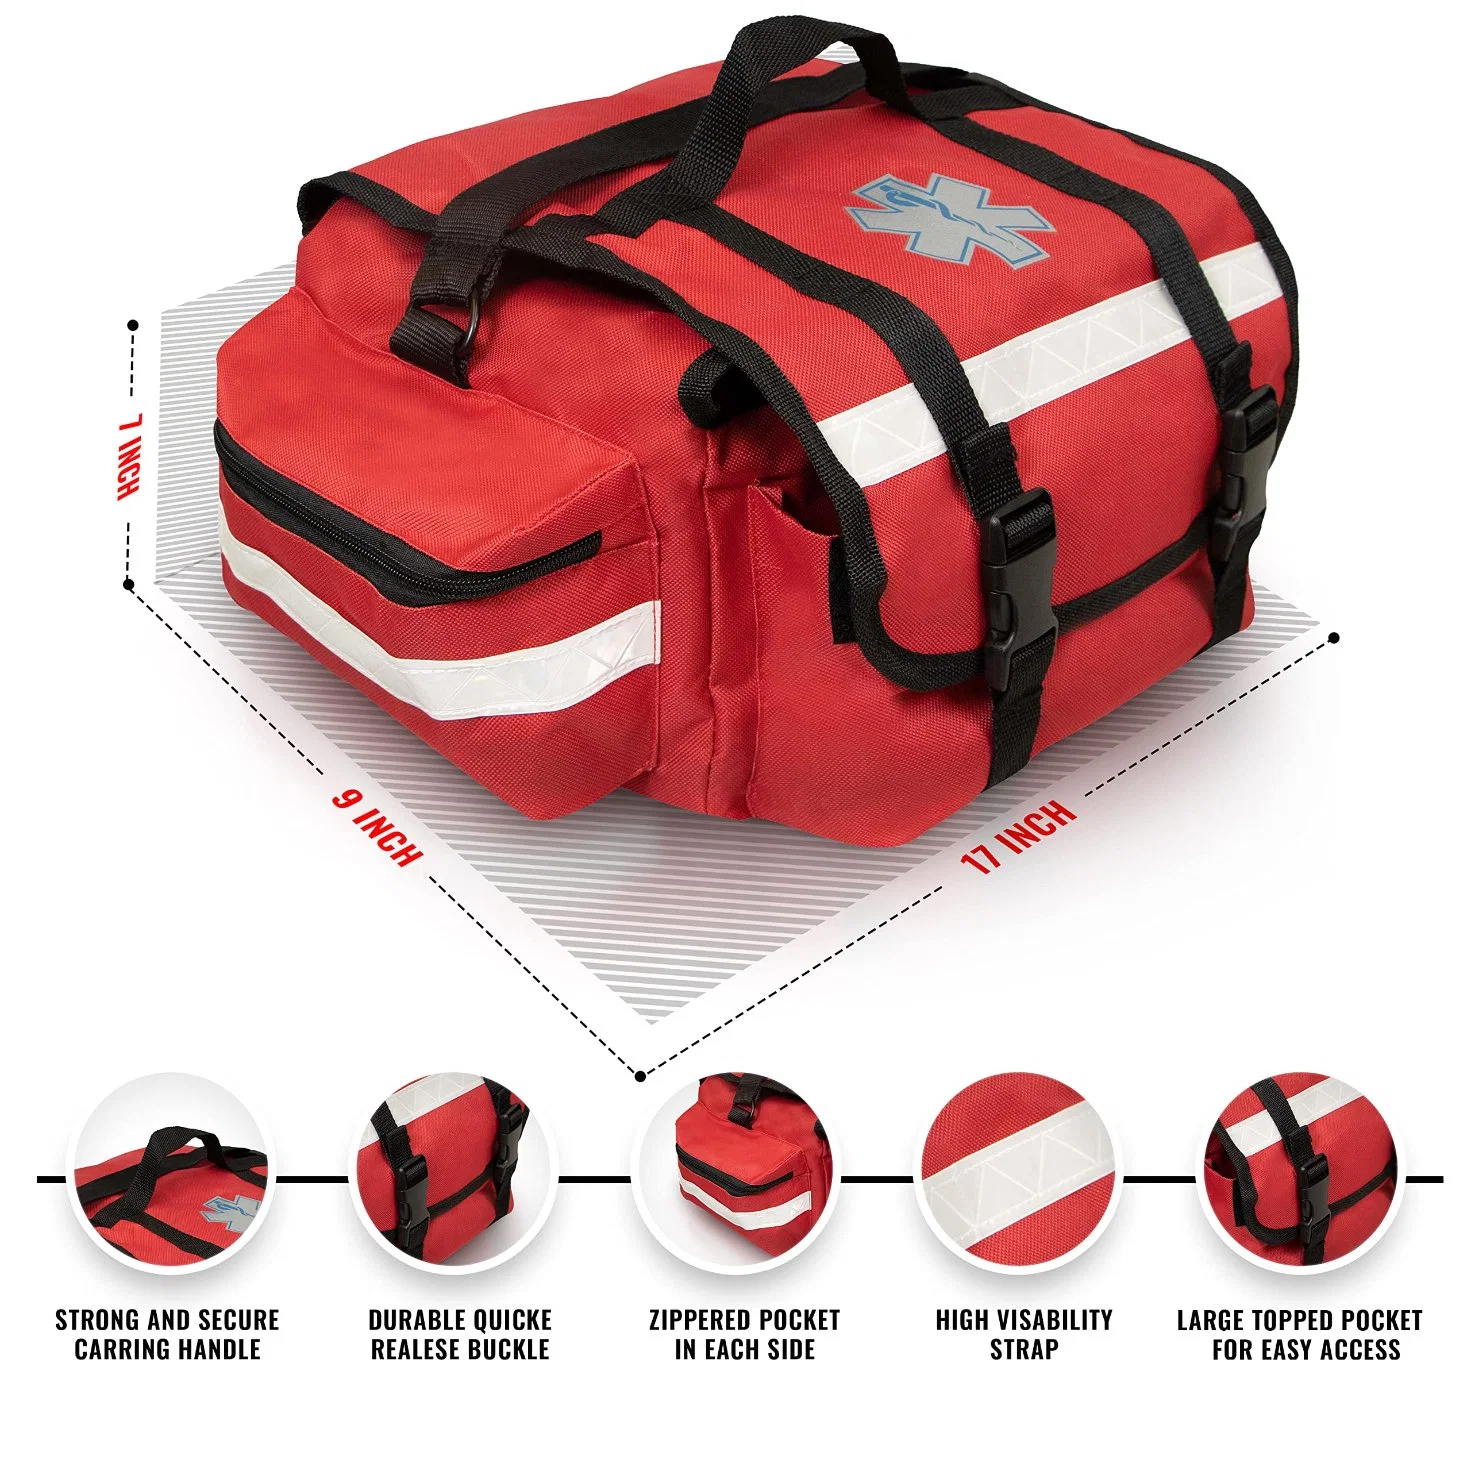 First Aid Responder EMS/EMT Emergency Medical Bag Empty 17"X9"X7" - Ideal for Paramedics, Firefighters, Nurses, Emts, Home Health Aides